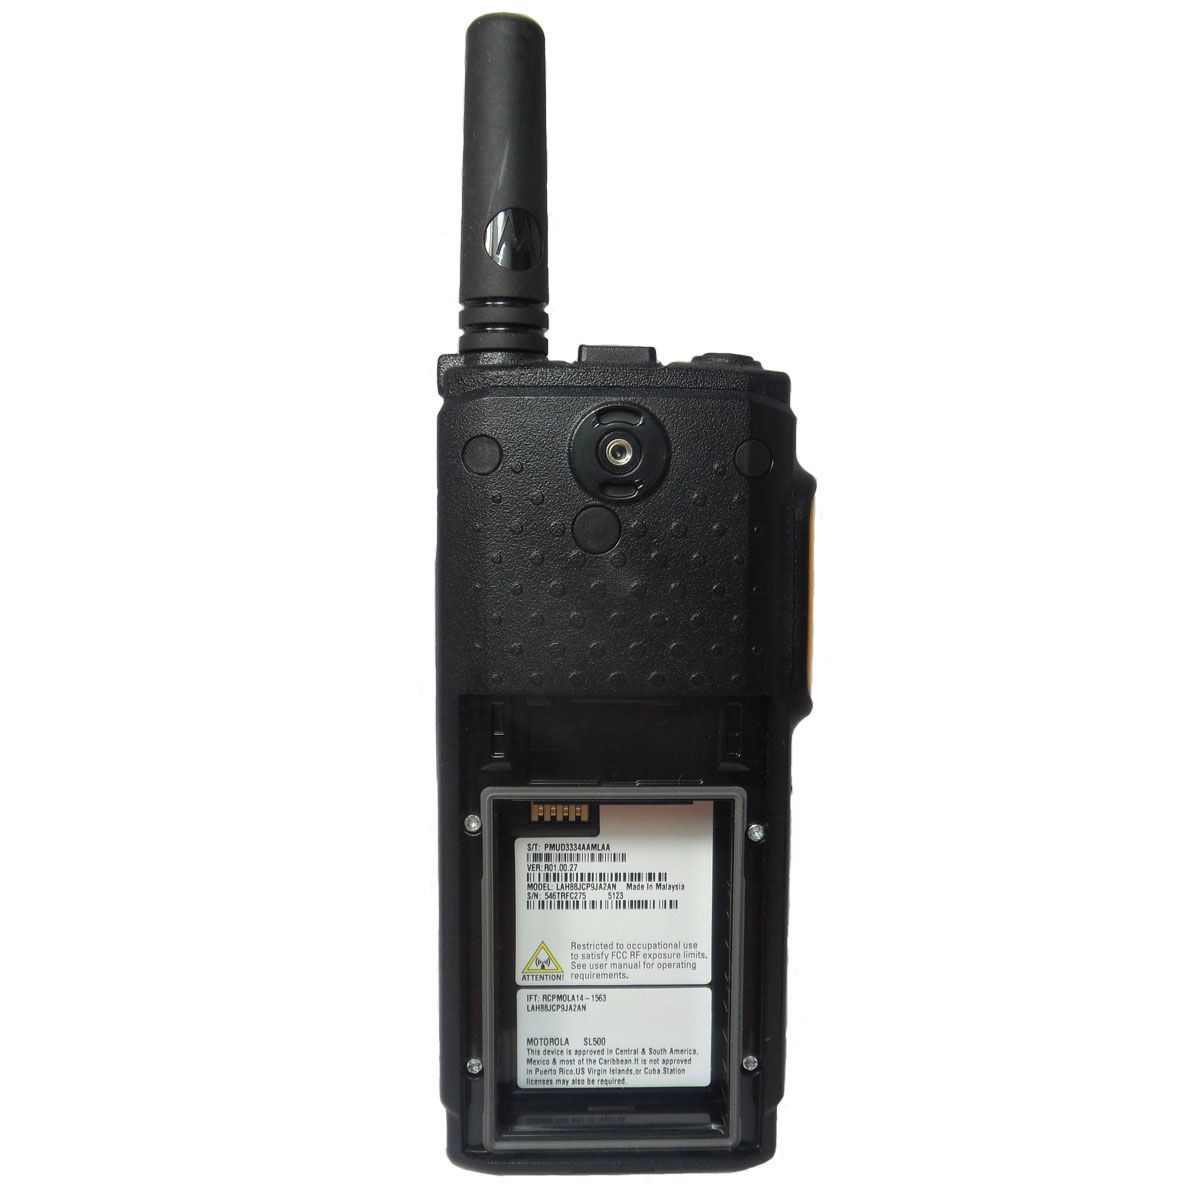 Radio Motorola SL500 Digital LAH88QCP9JA2AN UHF 403-480 MHz